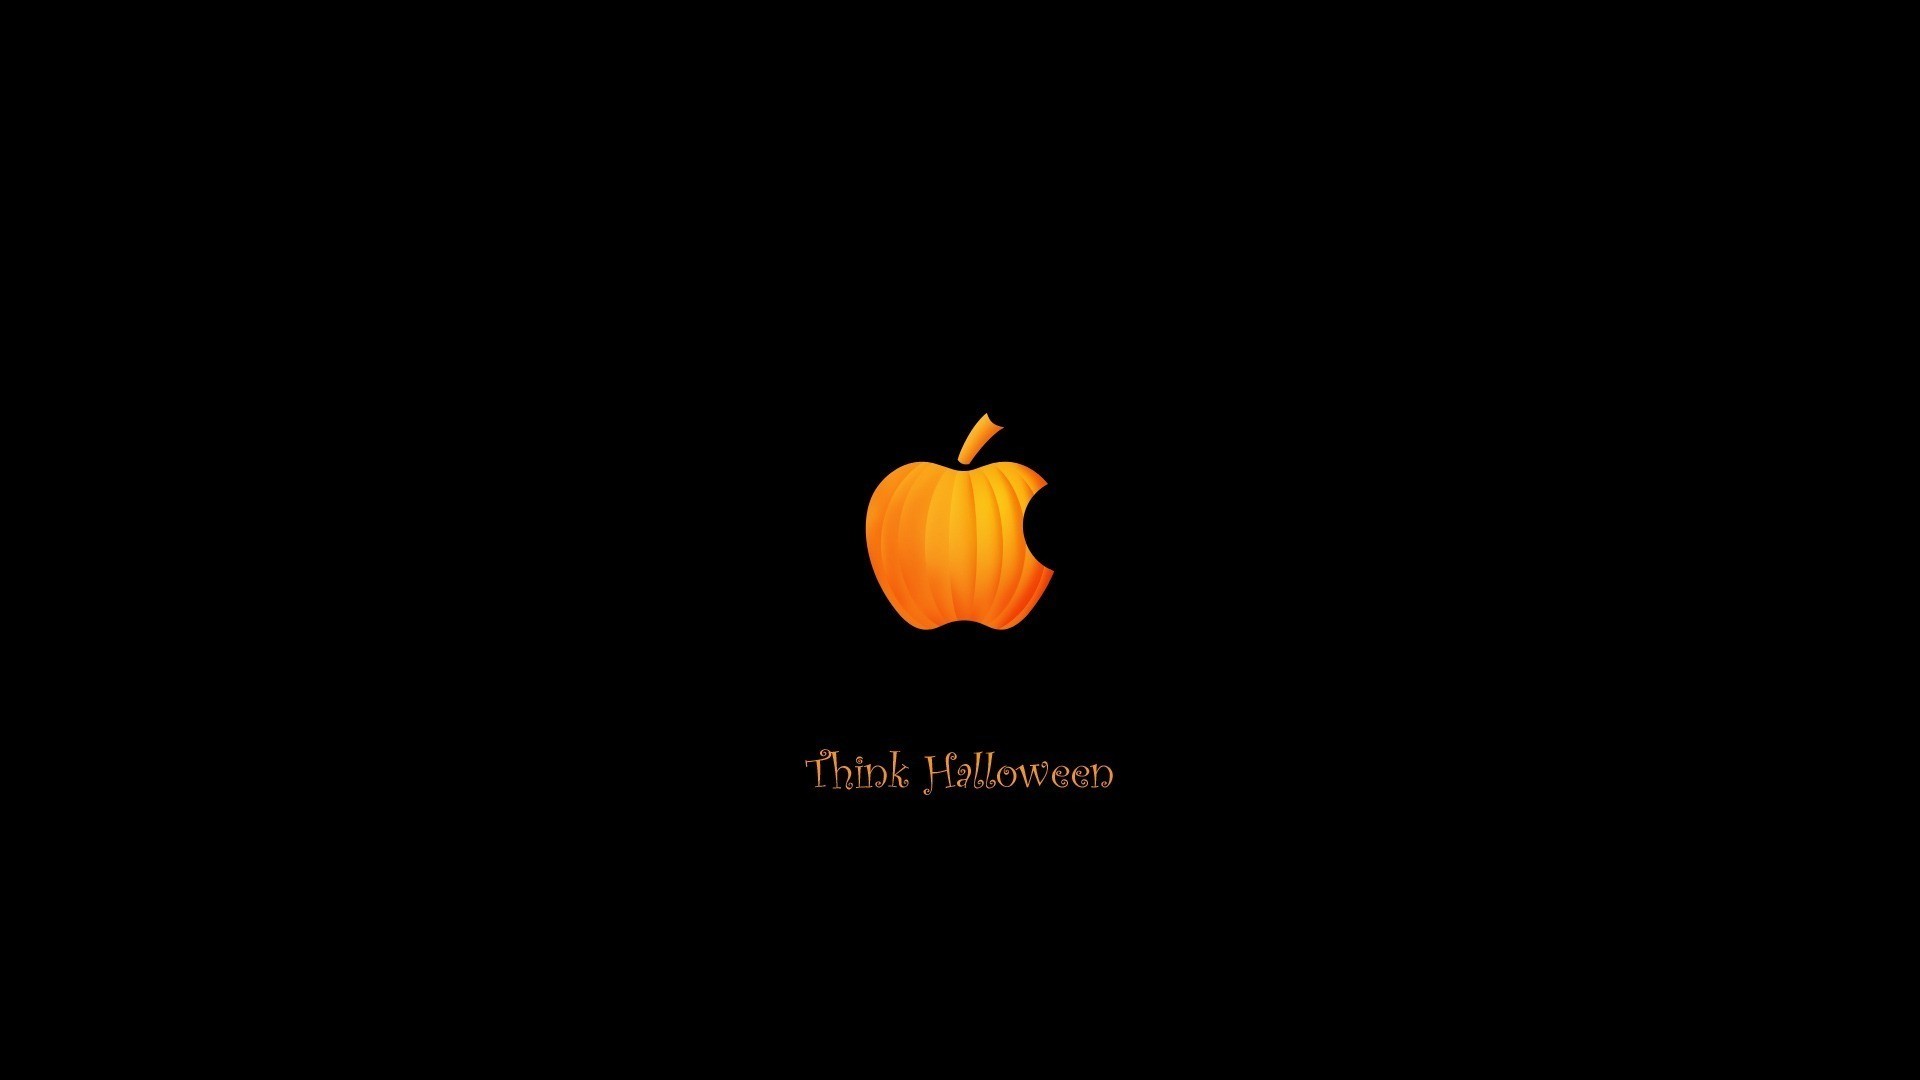 1920x1080 ... Halloween HD Backgrounds Free Download for Desktop Laptop PC ...